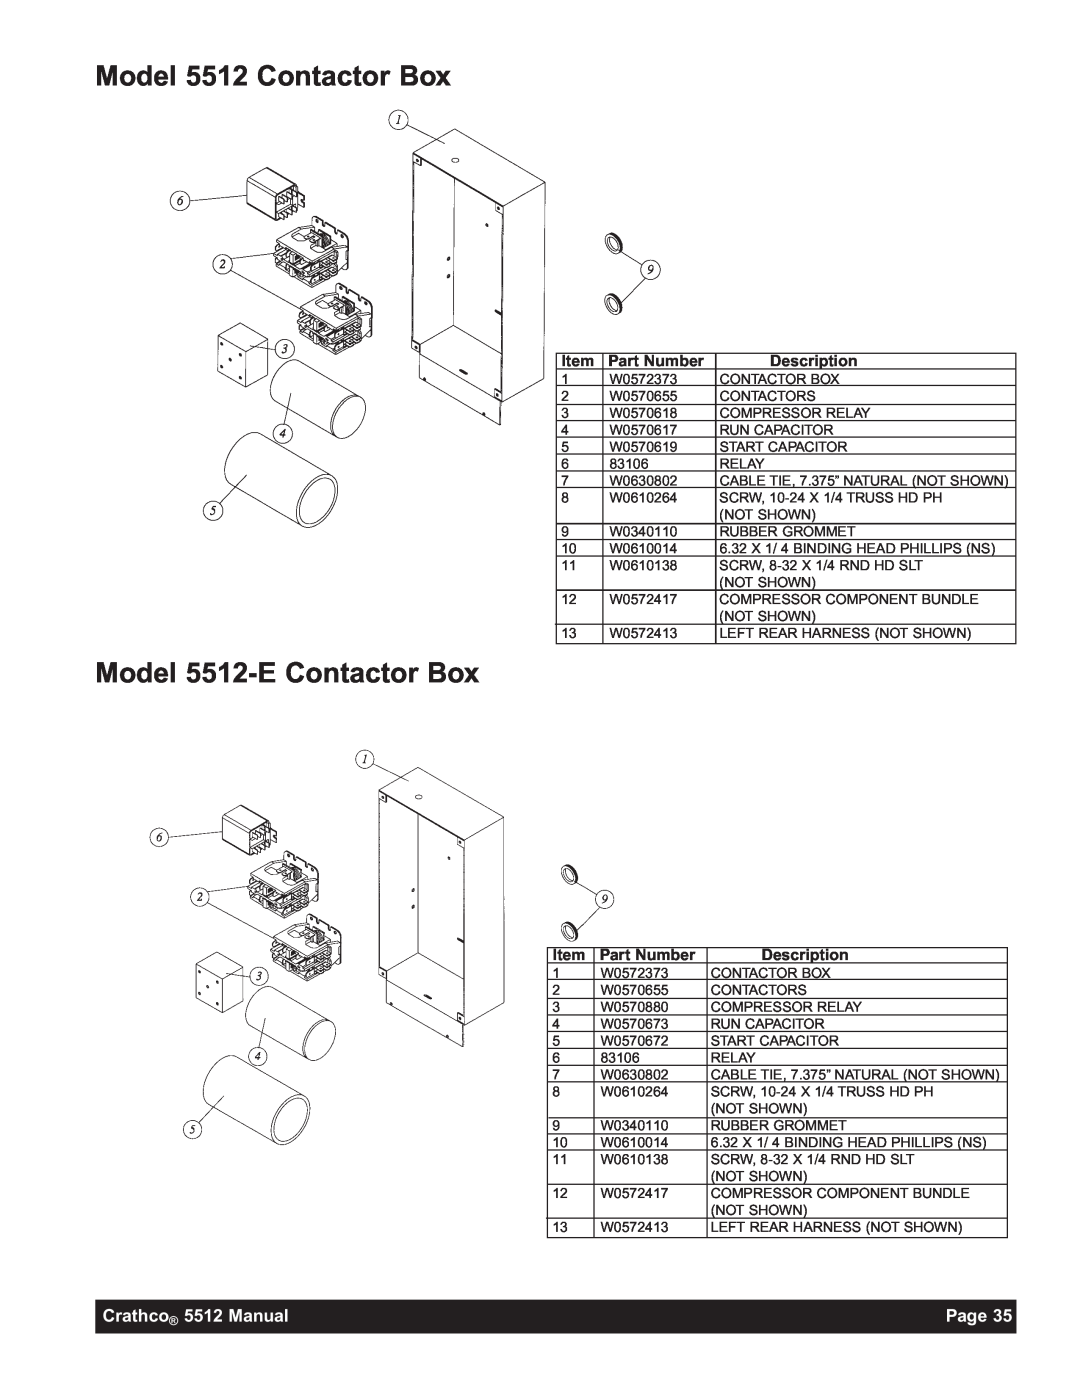 Grindmaster 5512E instruction manual Model 5512 Contactor Box, Model 5512-E Contactor Box, Crathco 5512 Manual, Page 